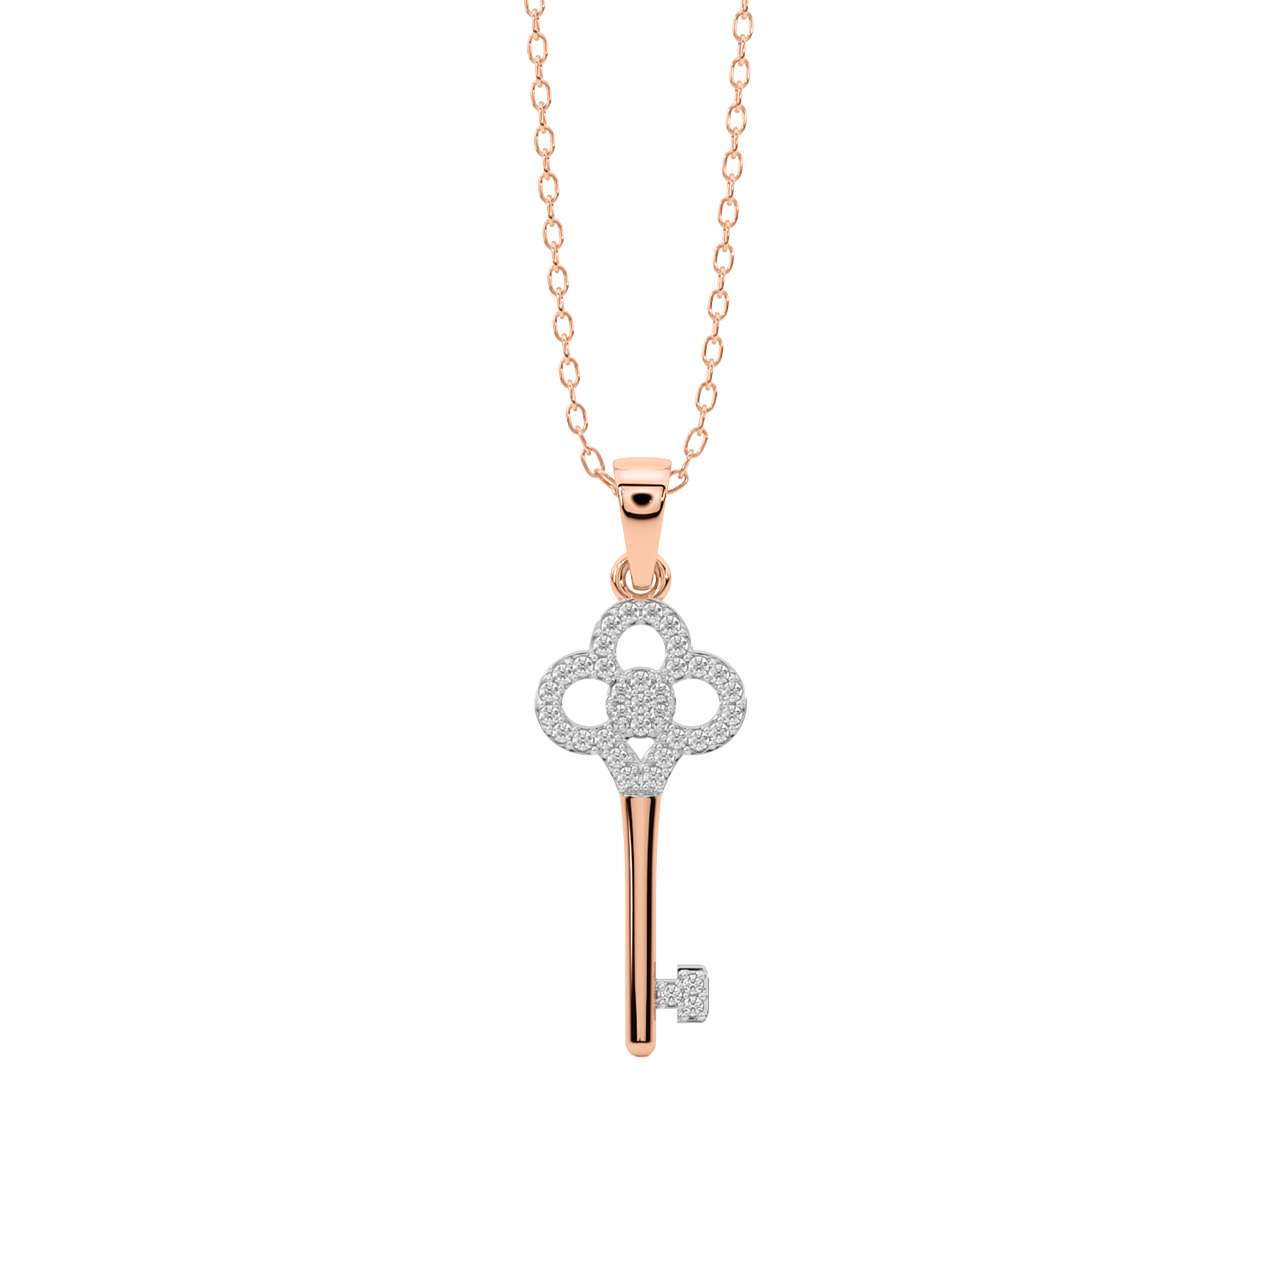 The Flower Key Diamond Pendant